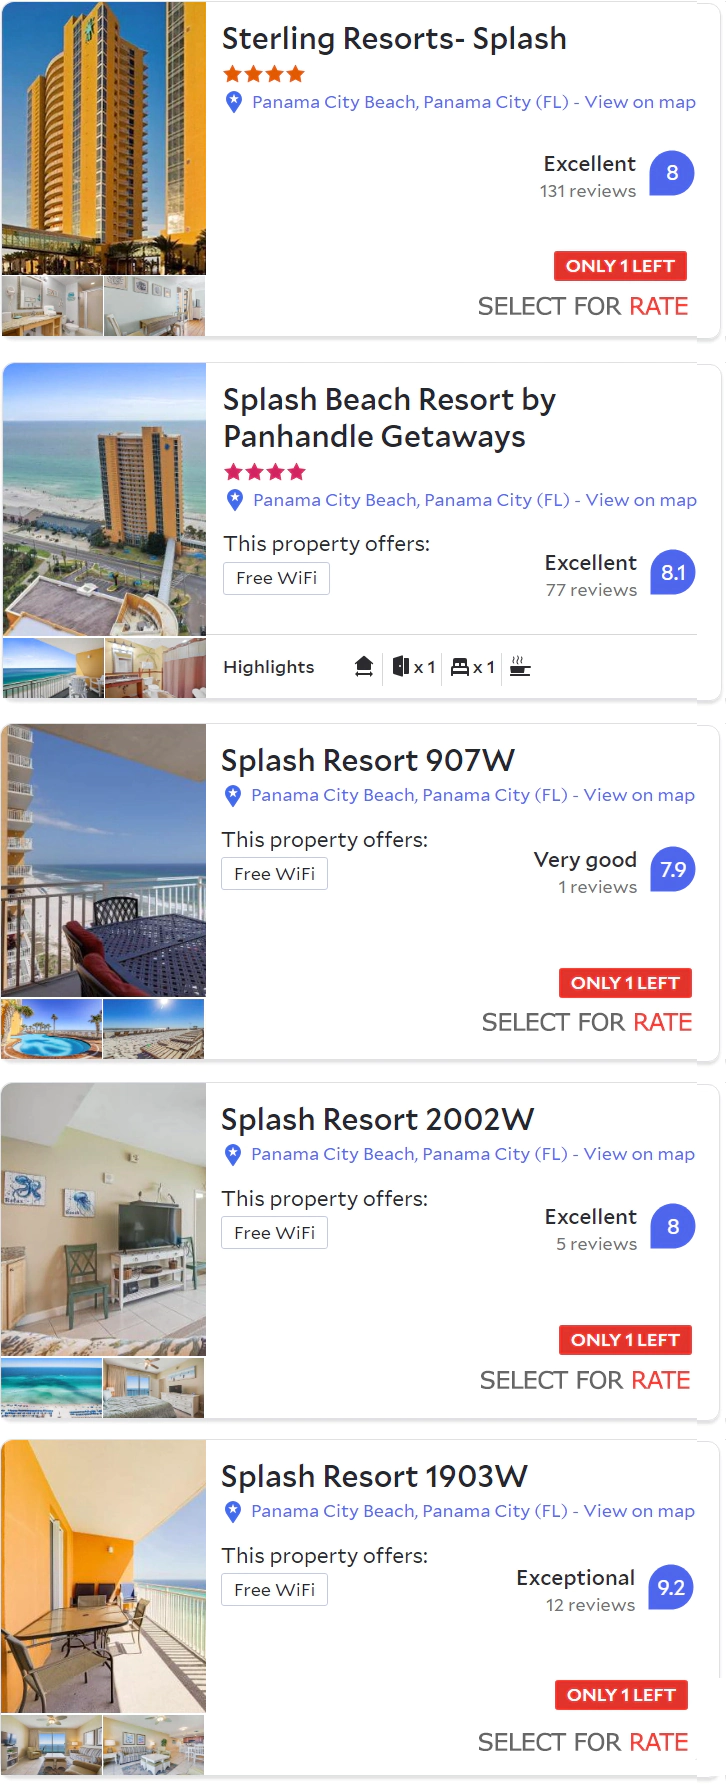 The Splash Resort Panama City Beach Florida